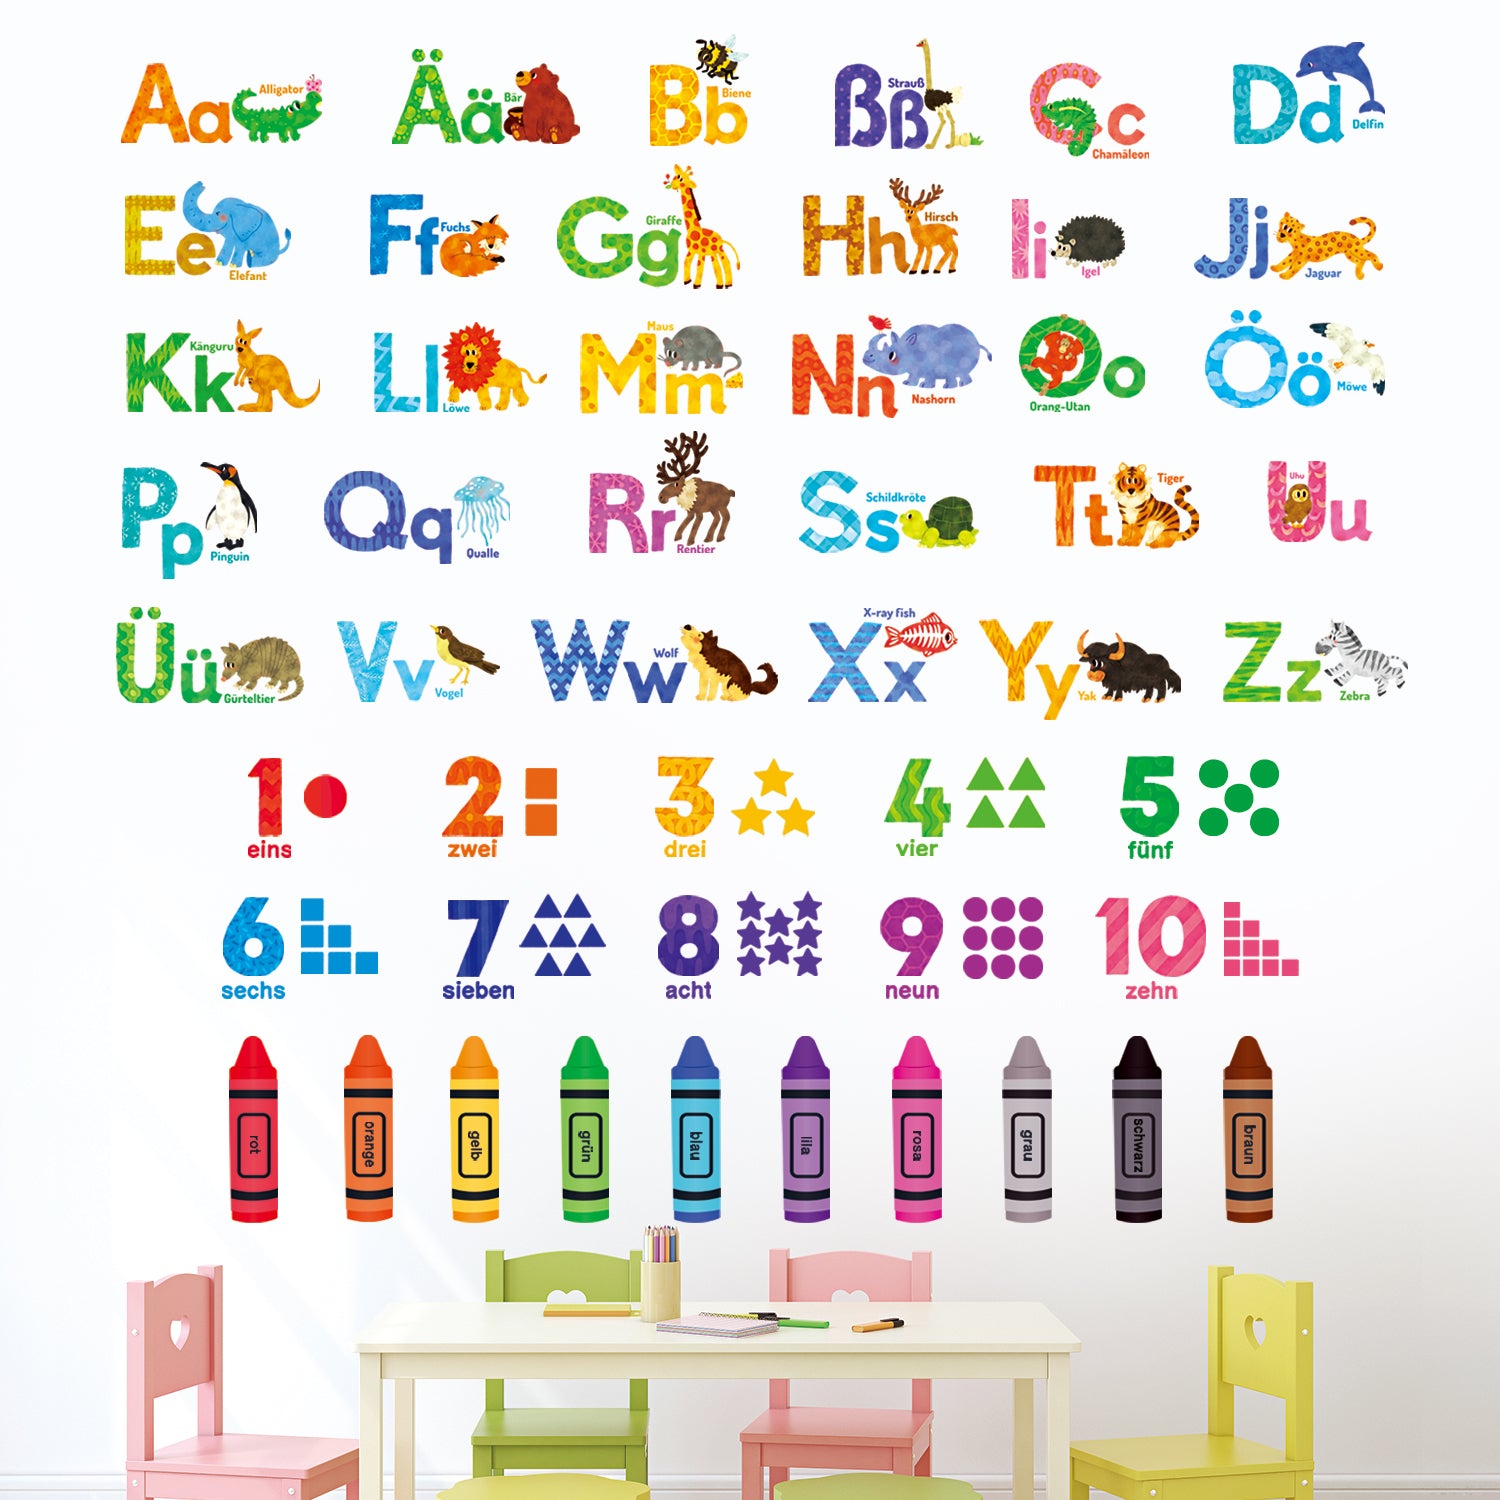 german alphabet for kids